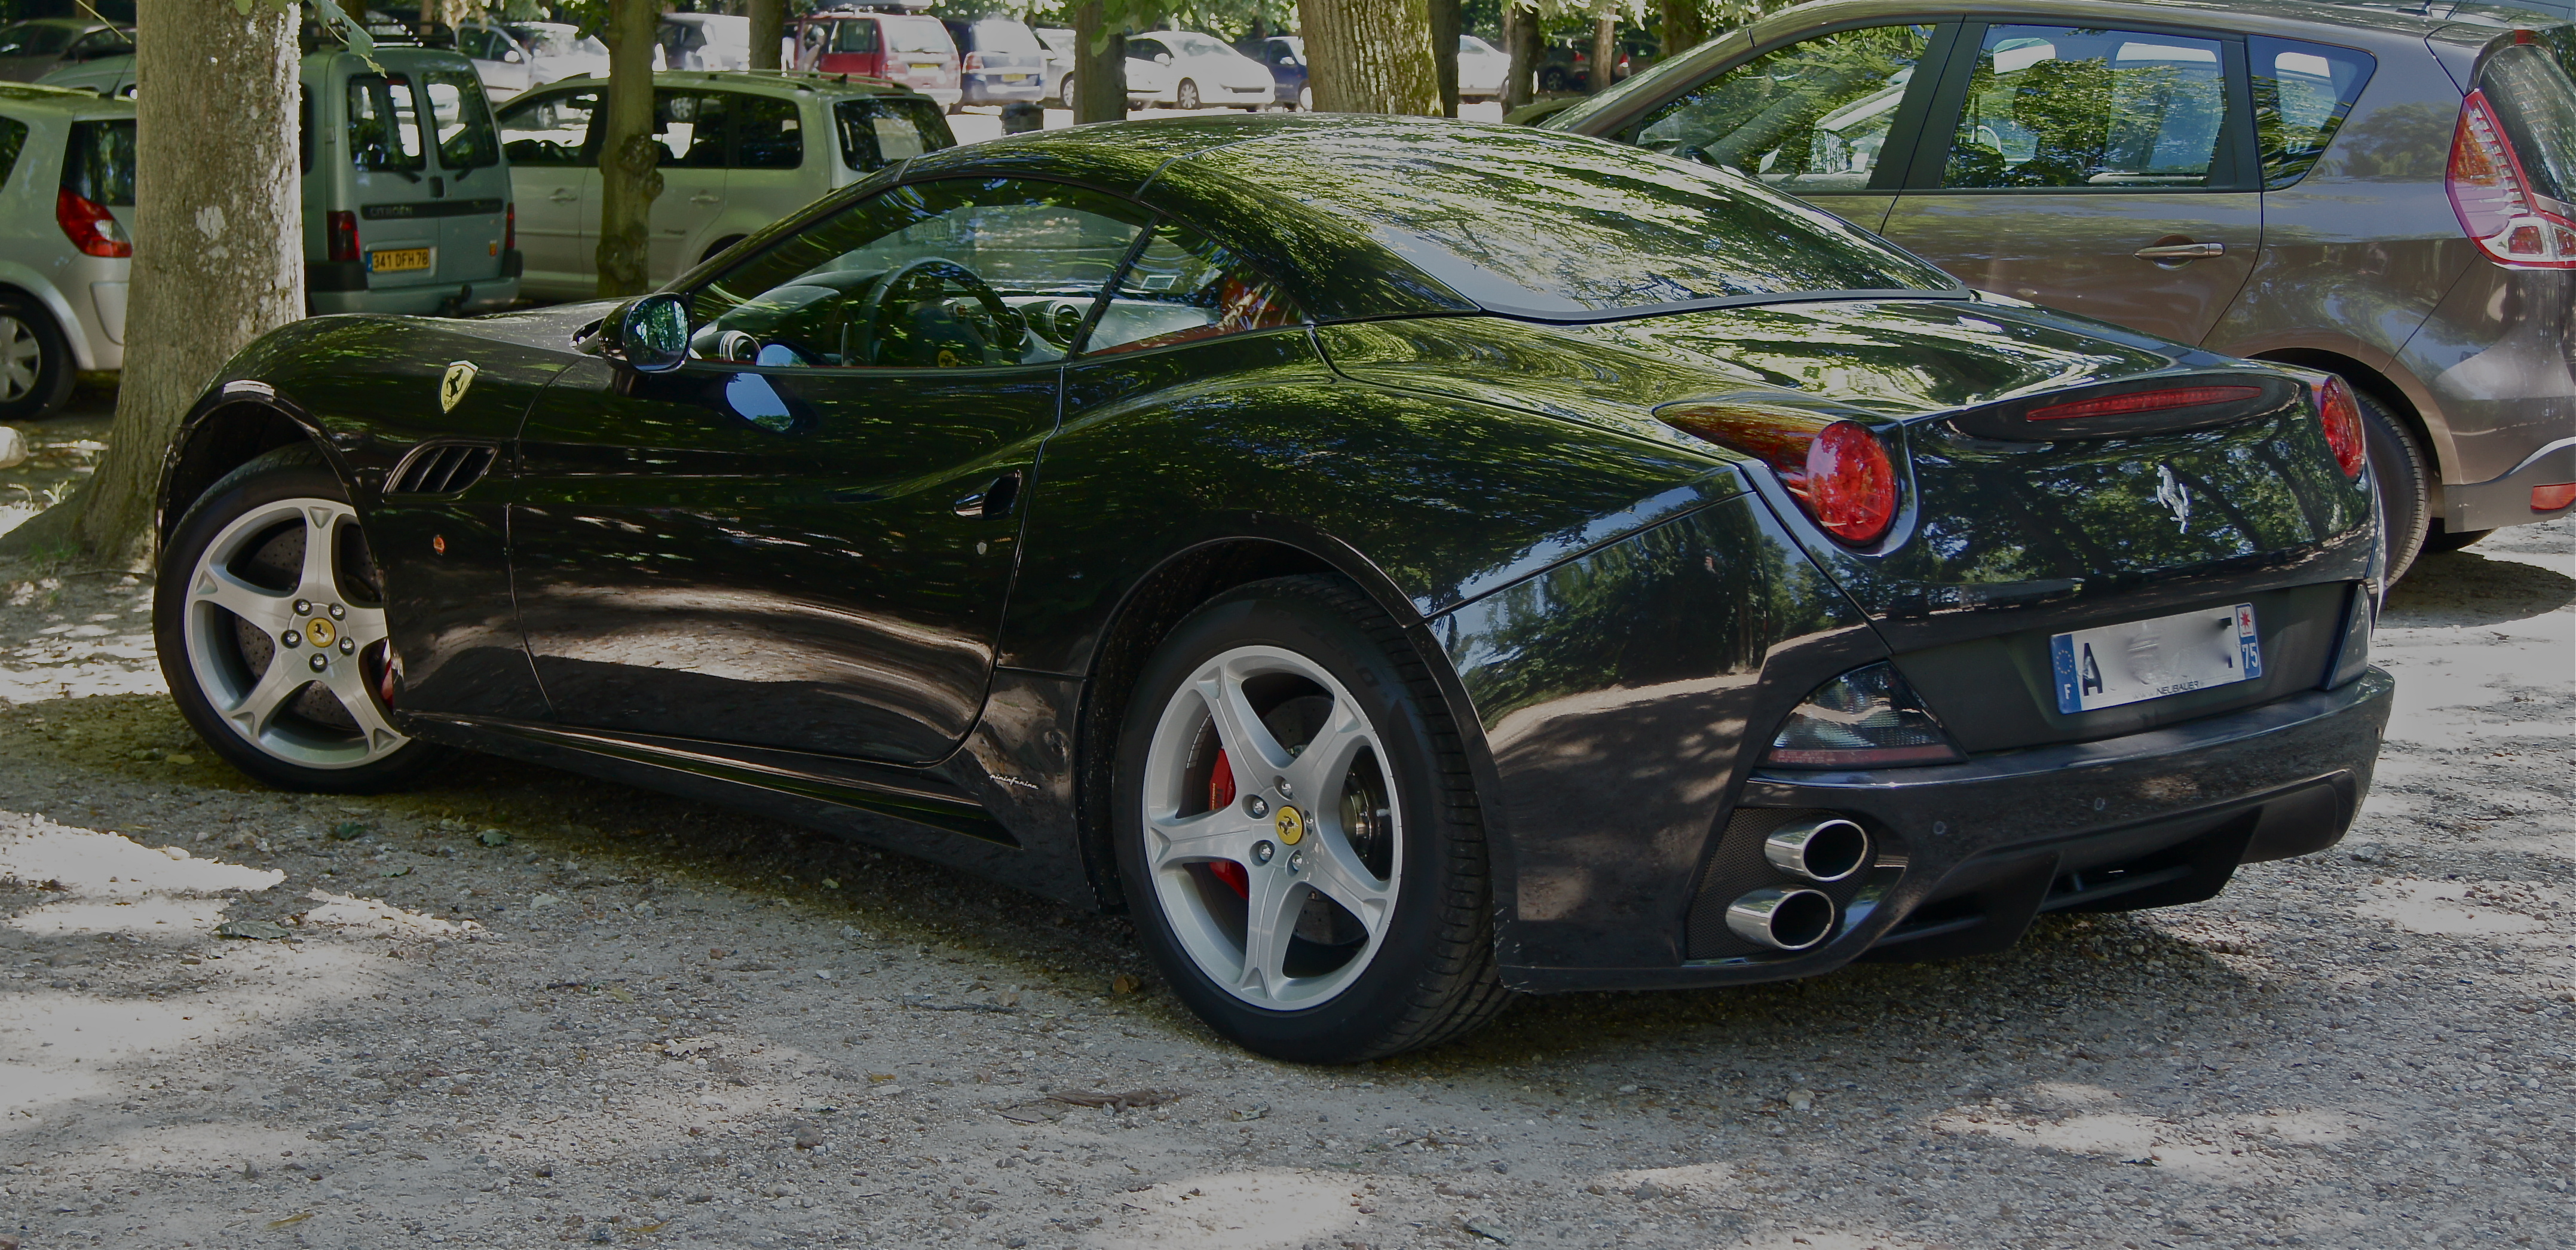 File:Ferrari California black.jpg - Wikimedia Commons